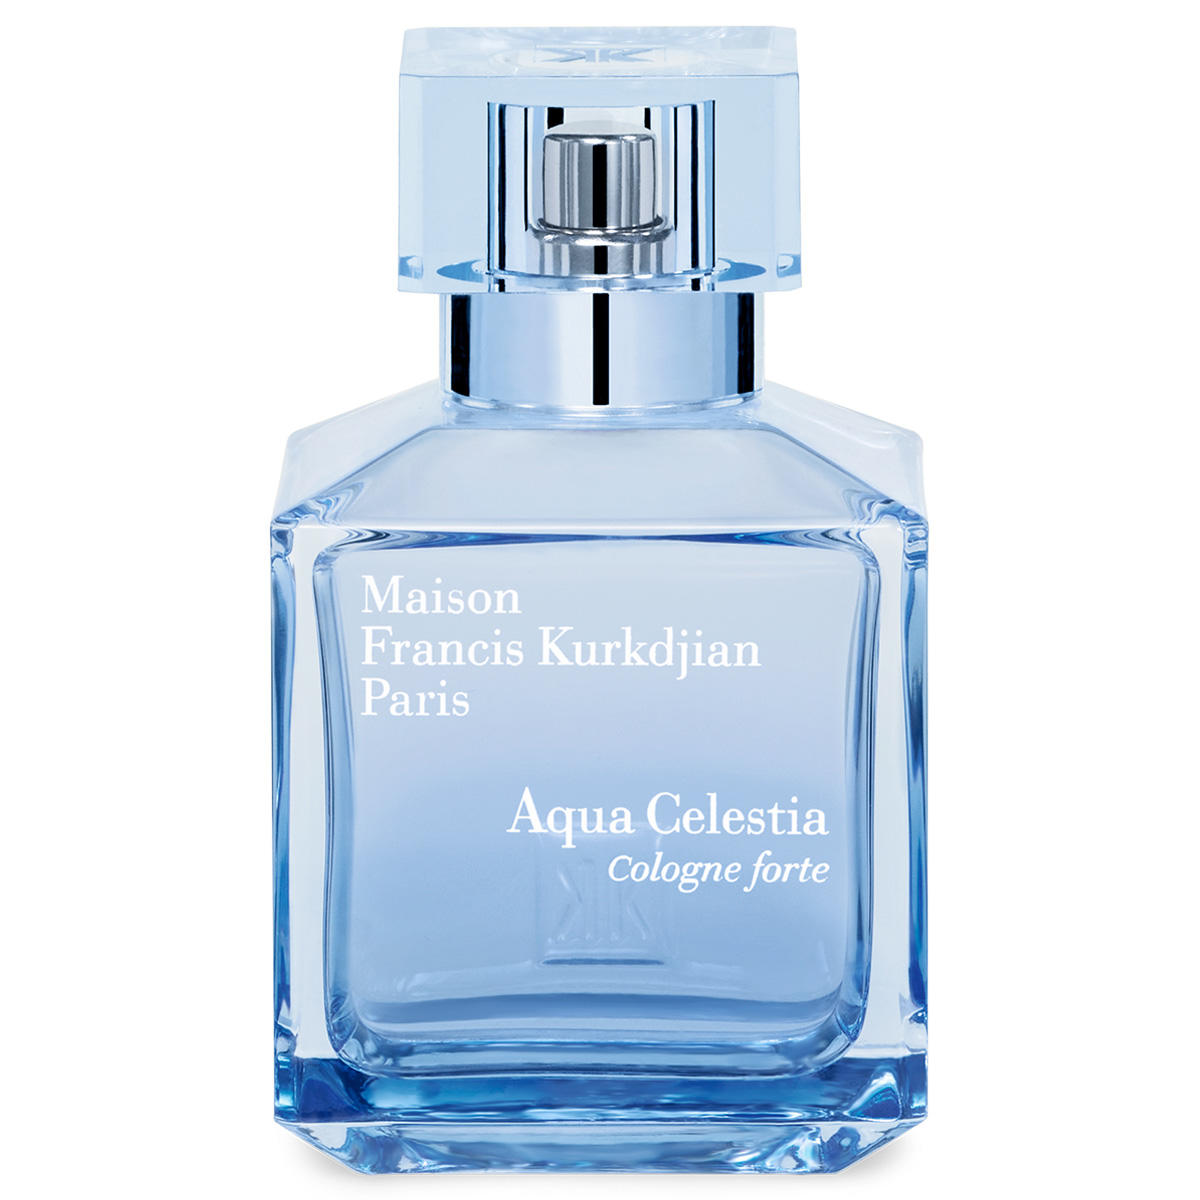 Maison Francis Kurkdjian Paris Aqua Celestia Cologne forte Eau de Parfum  - 1